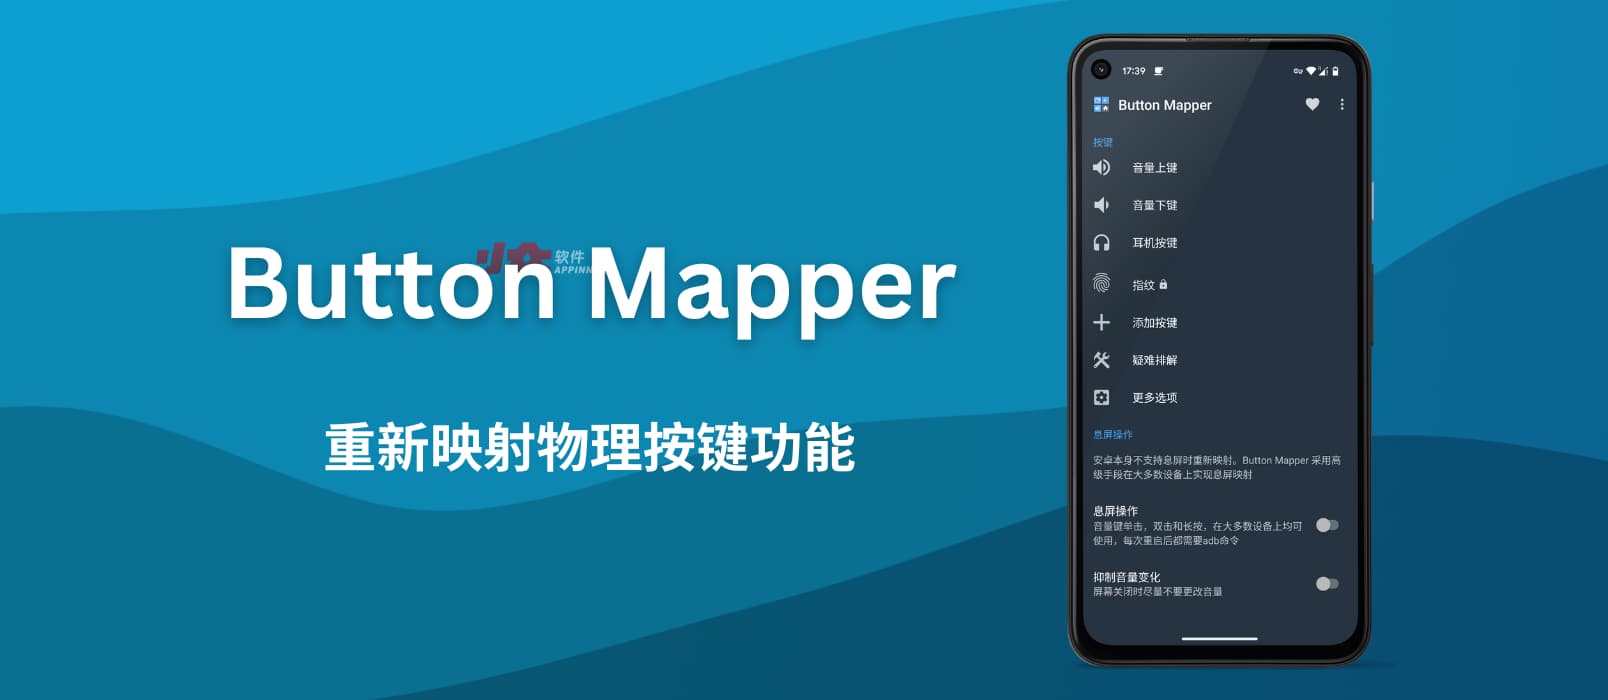 Button Mapper - 重新映射安卓手机音量+、音量- 的按键功能